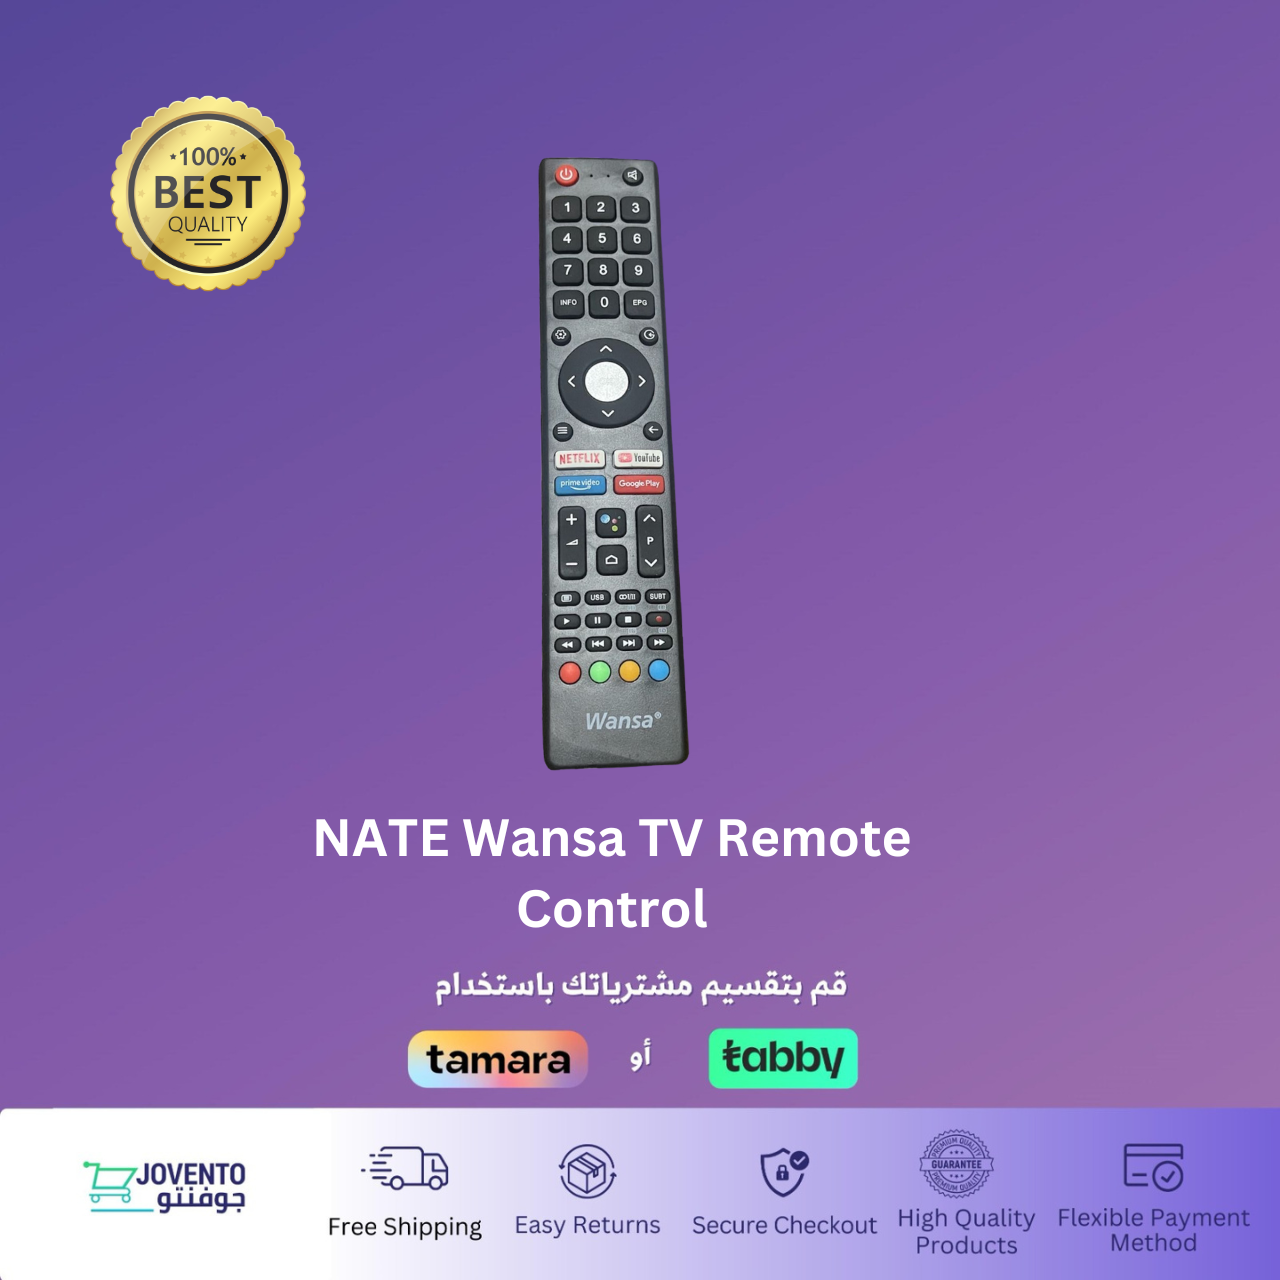 NATE Wansa TV Remote Control